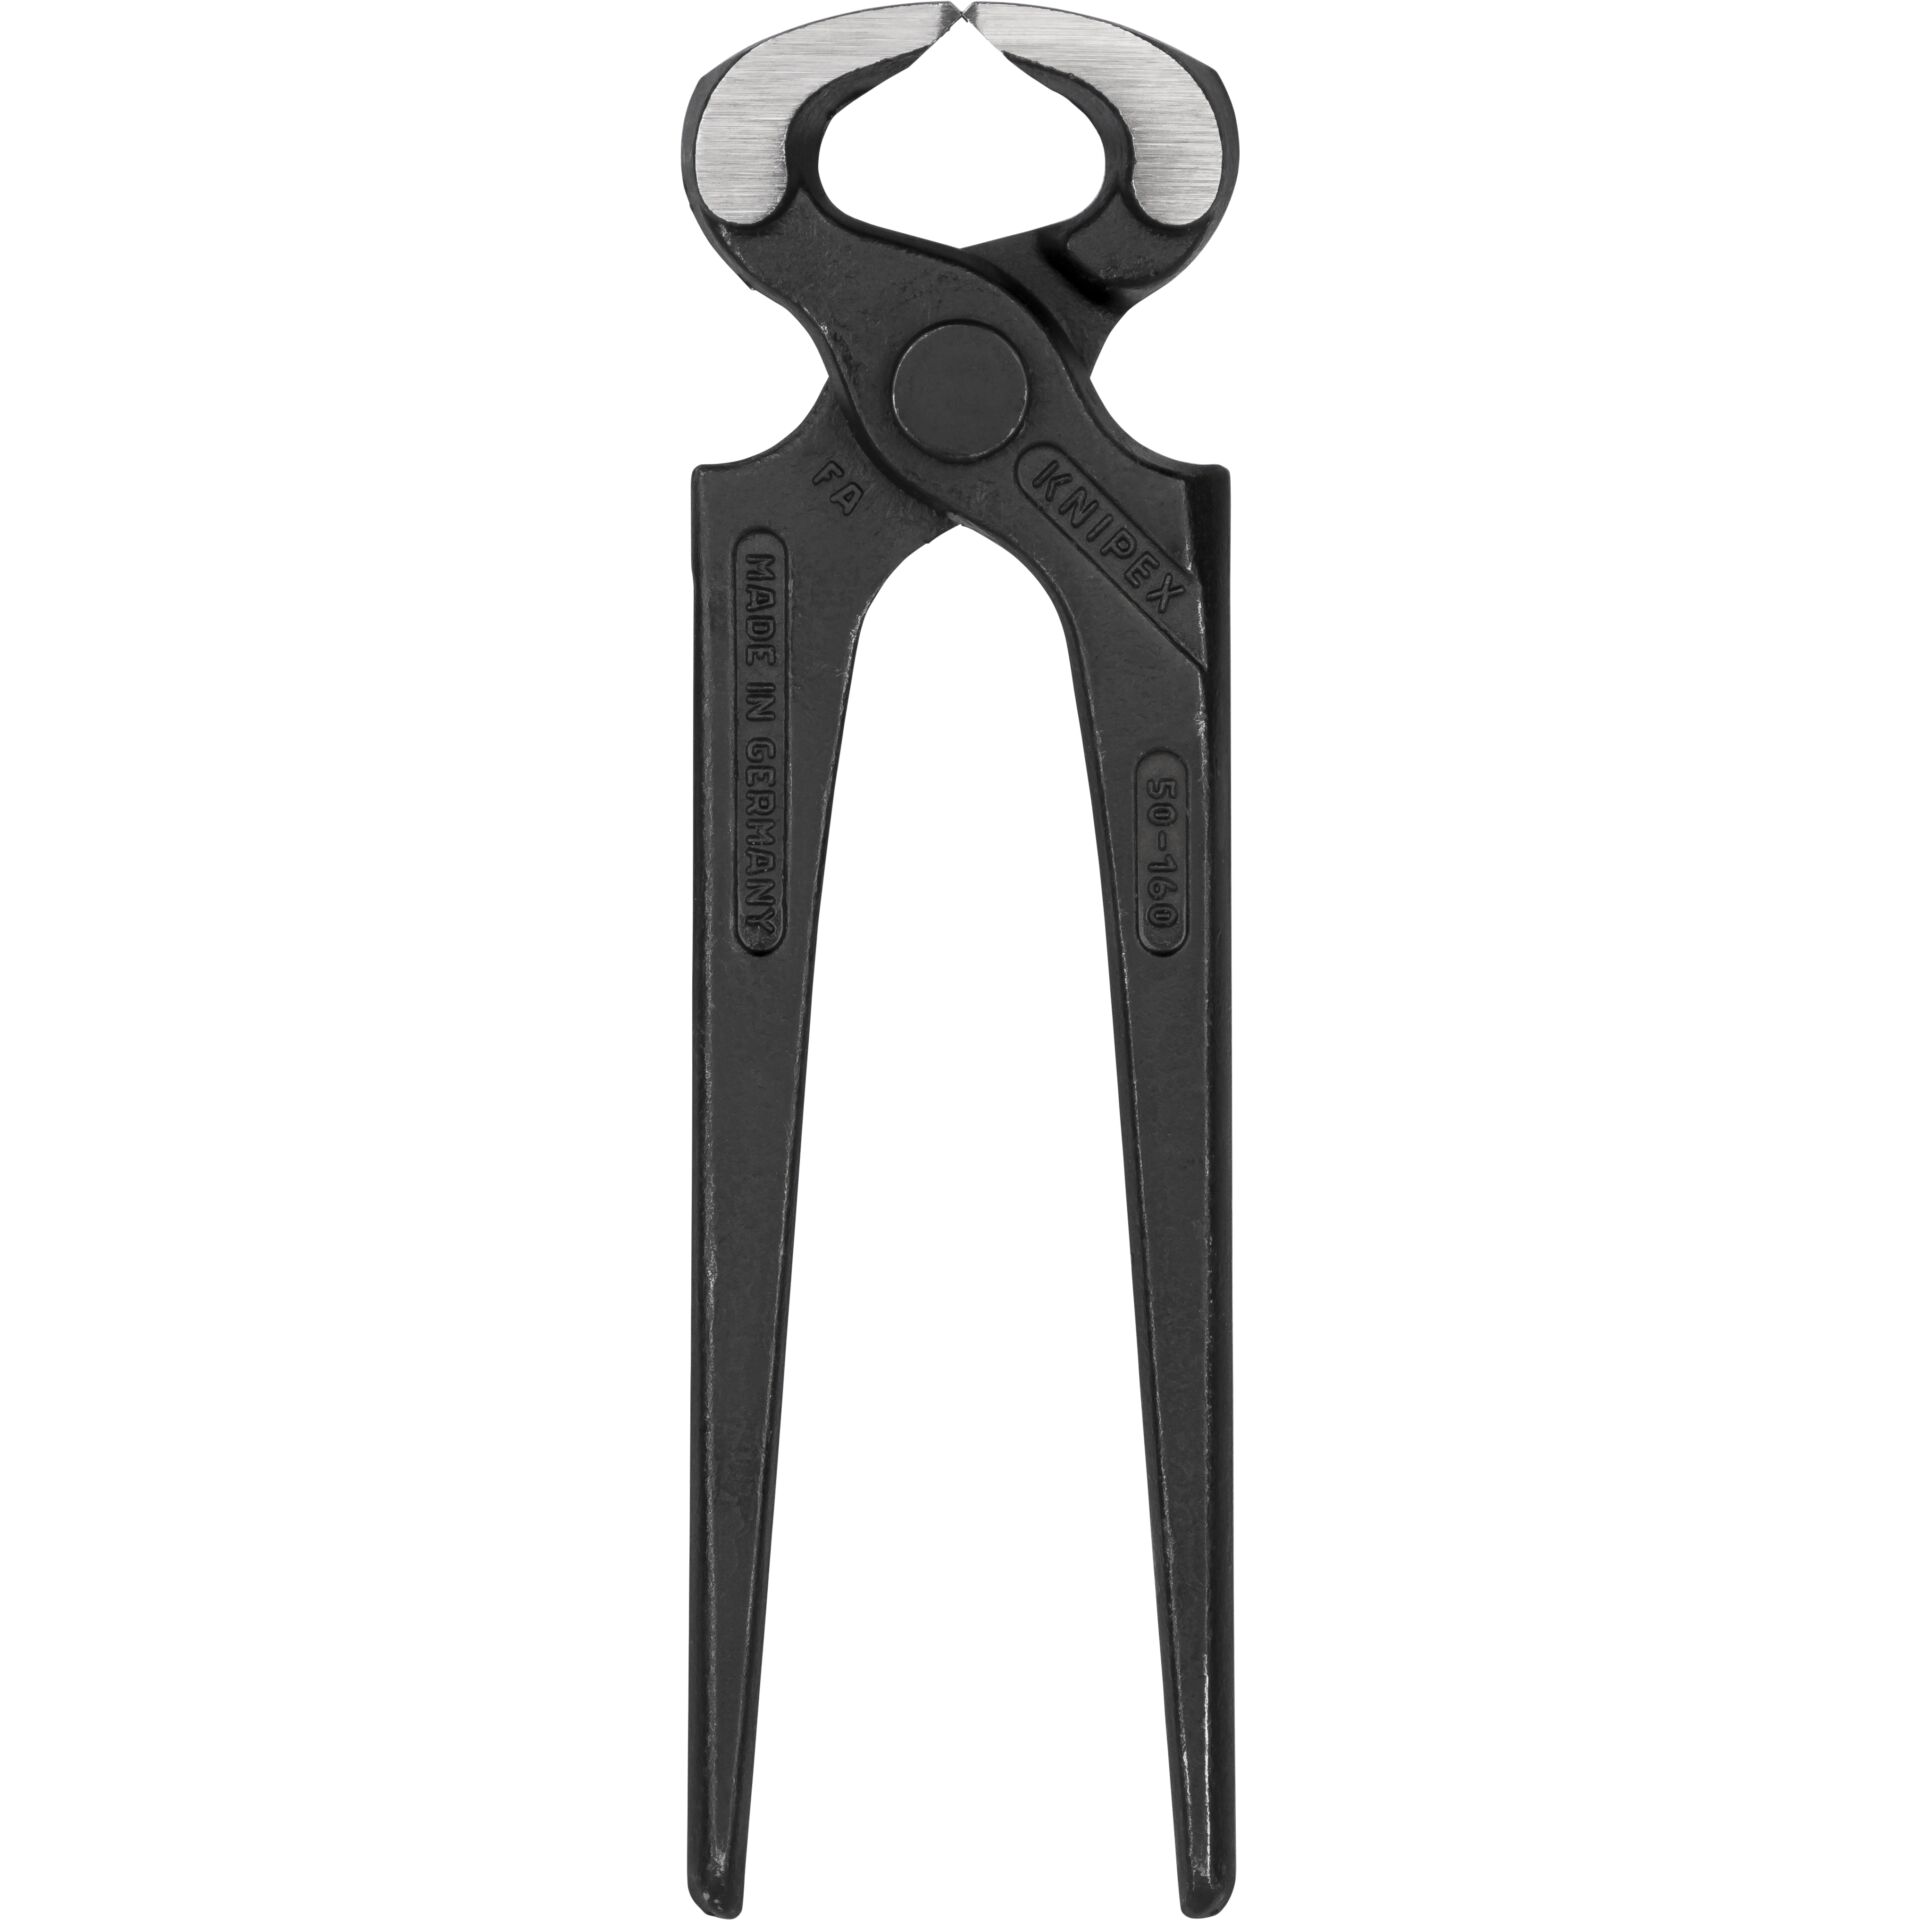 Knipex 50 00 160. Typ: Pinzette, Material: Stahl, Materiallgriff: Stahl. LA¤nge: 16 cm, Gewicht: 215 g (50 00 160)